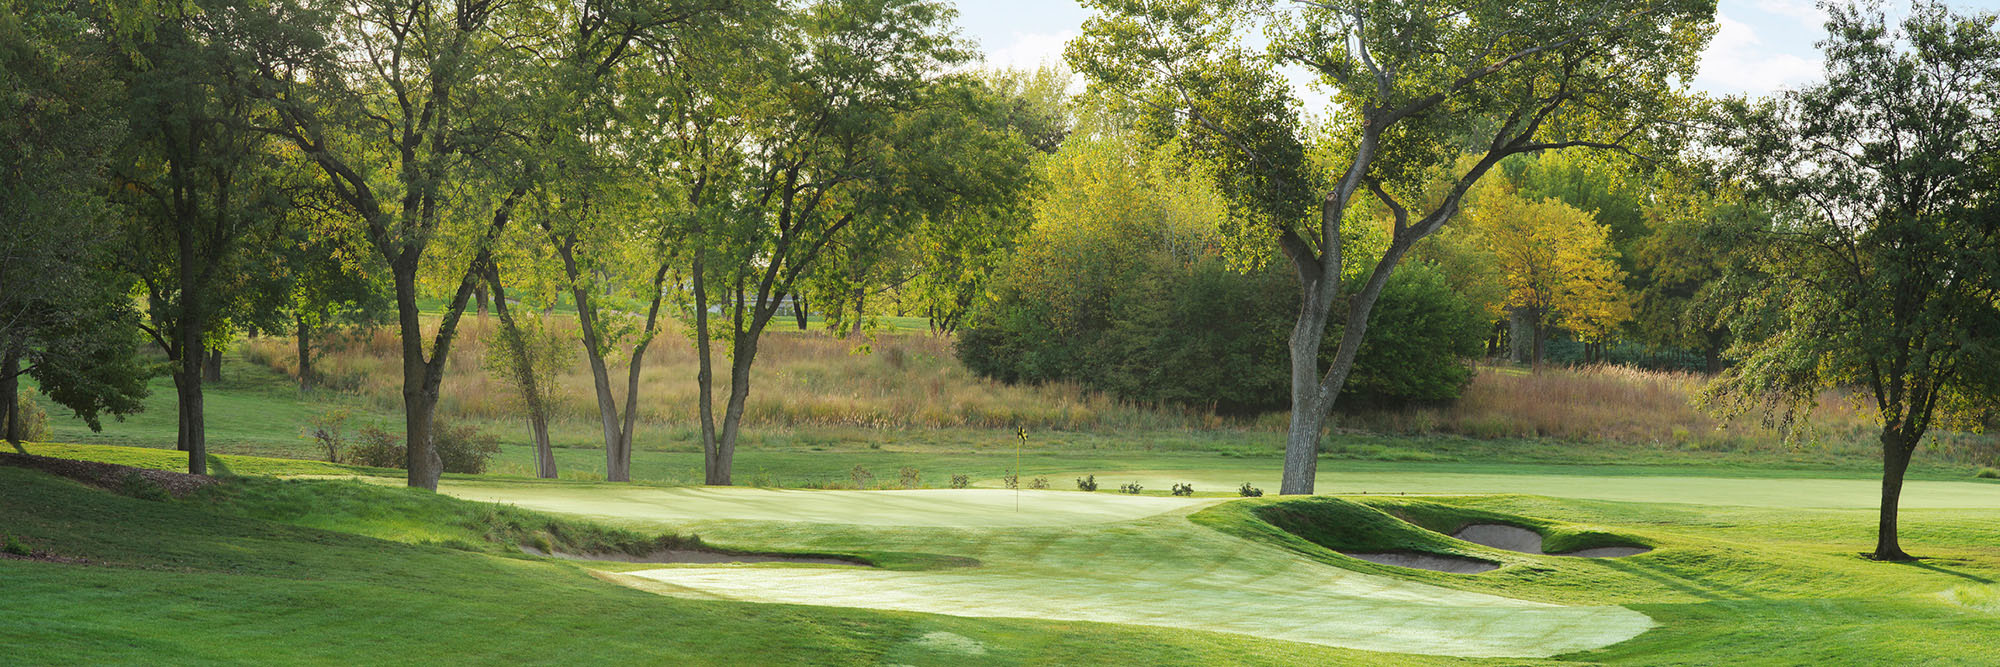 Golf Course Image - Glen Oaks No. 16